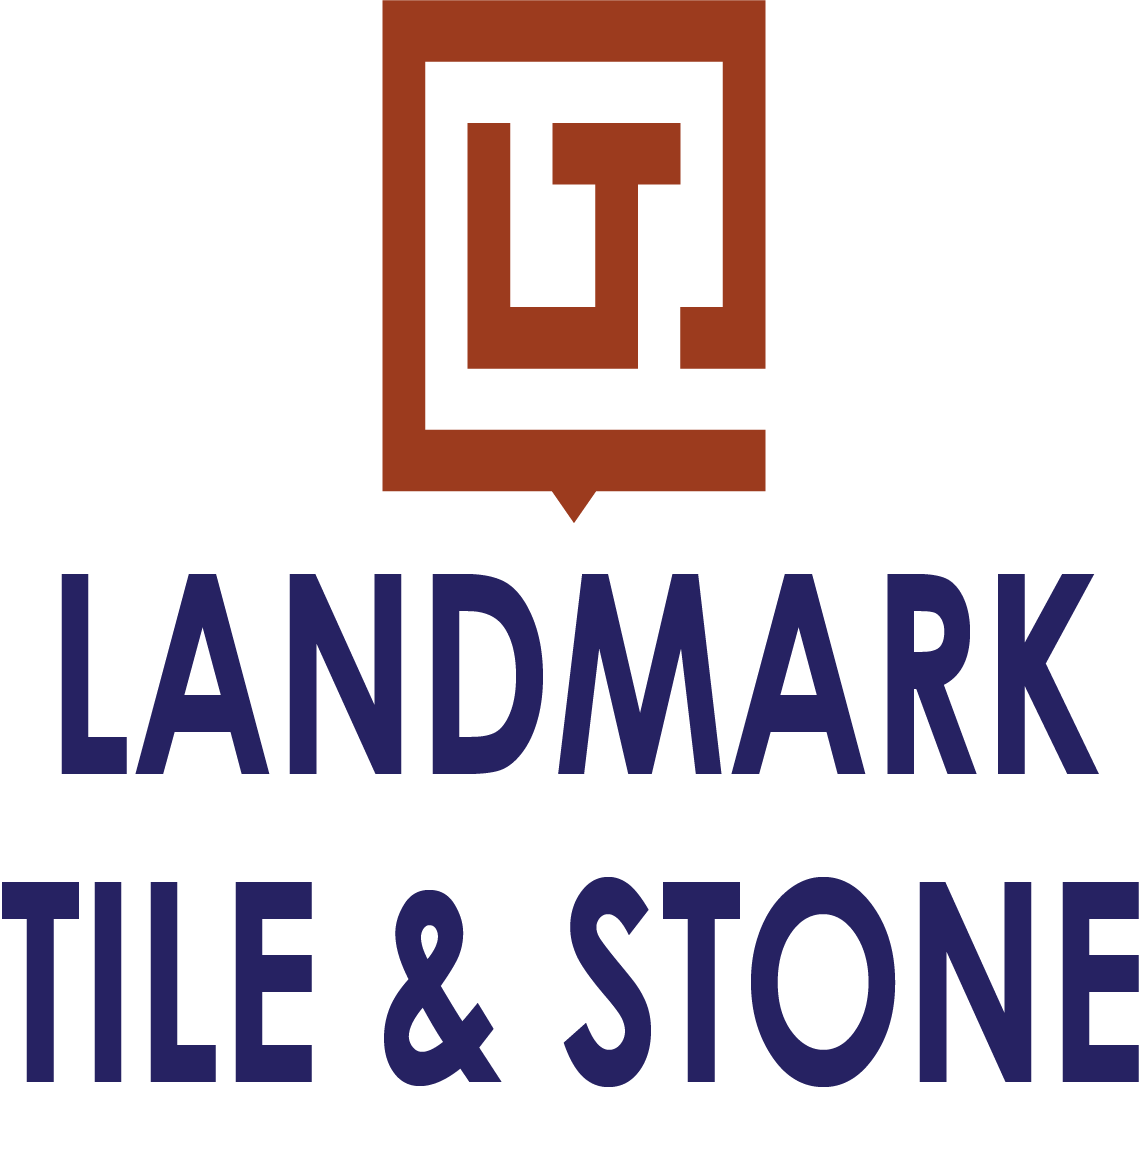 Landmark Tile & Stone